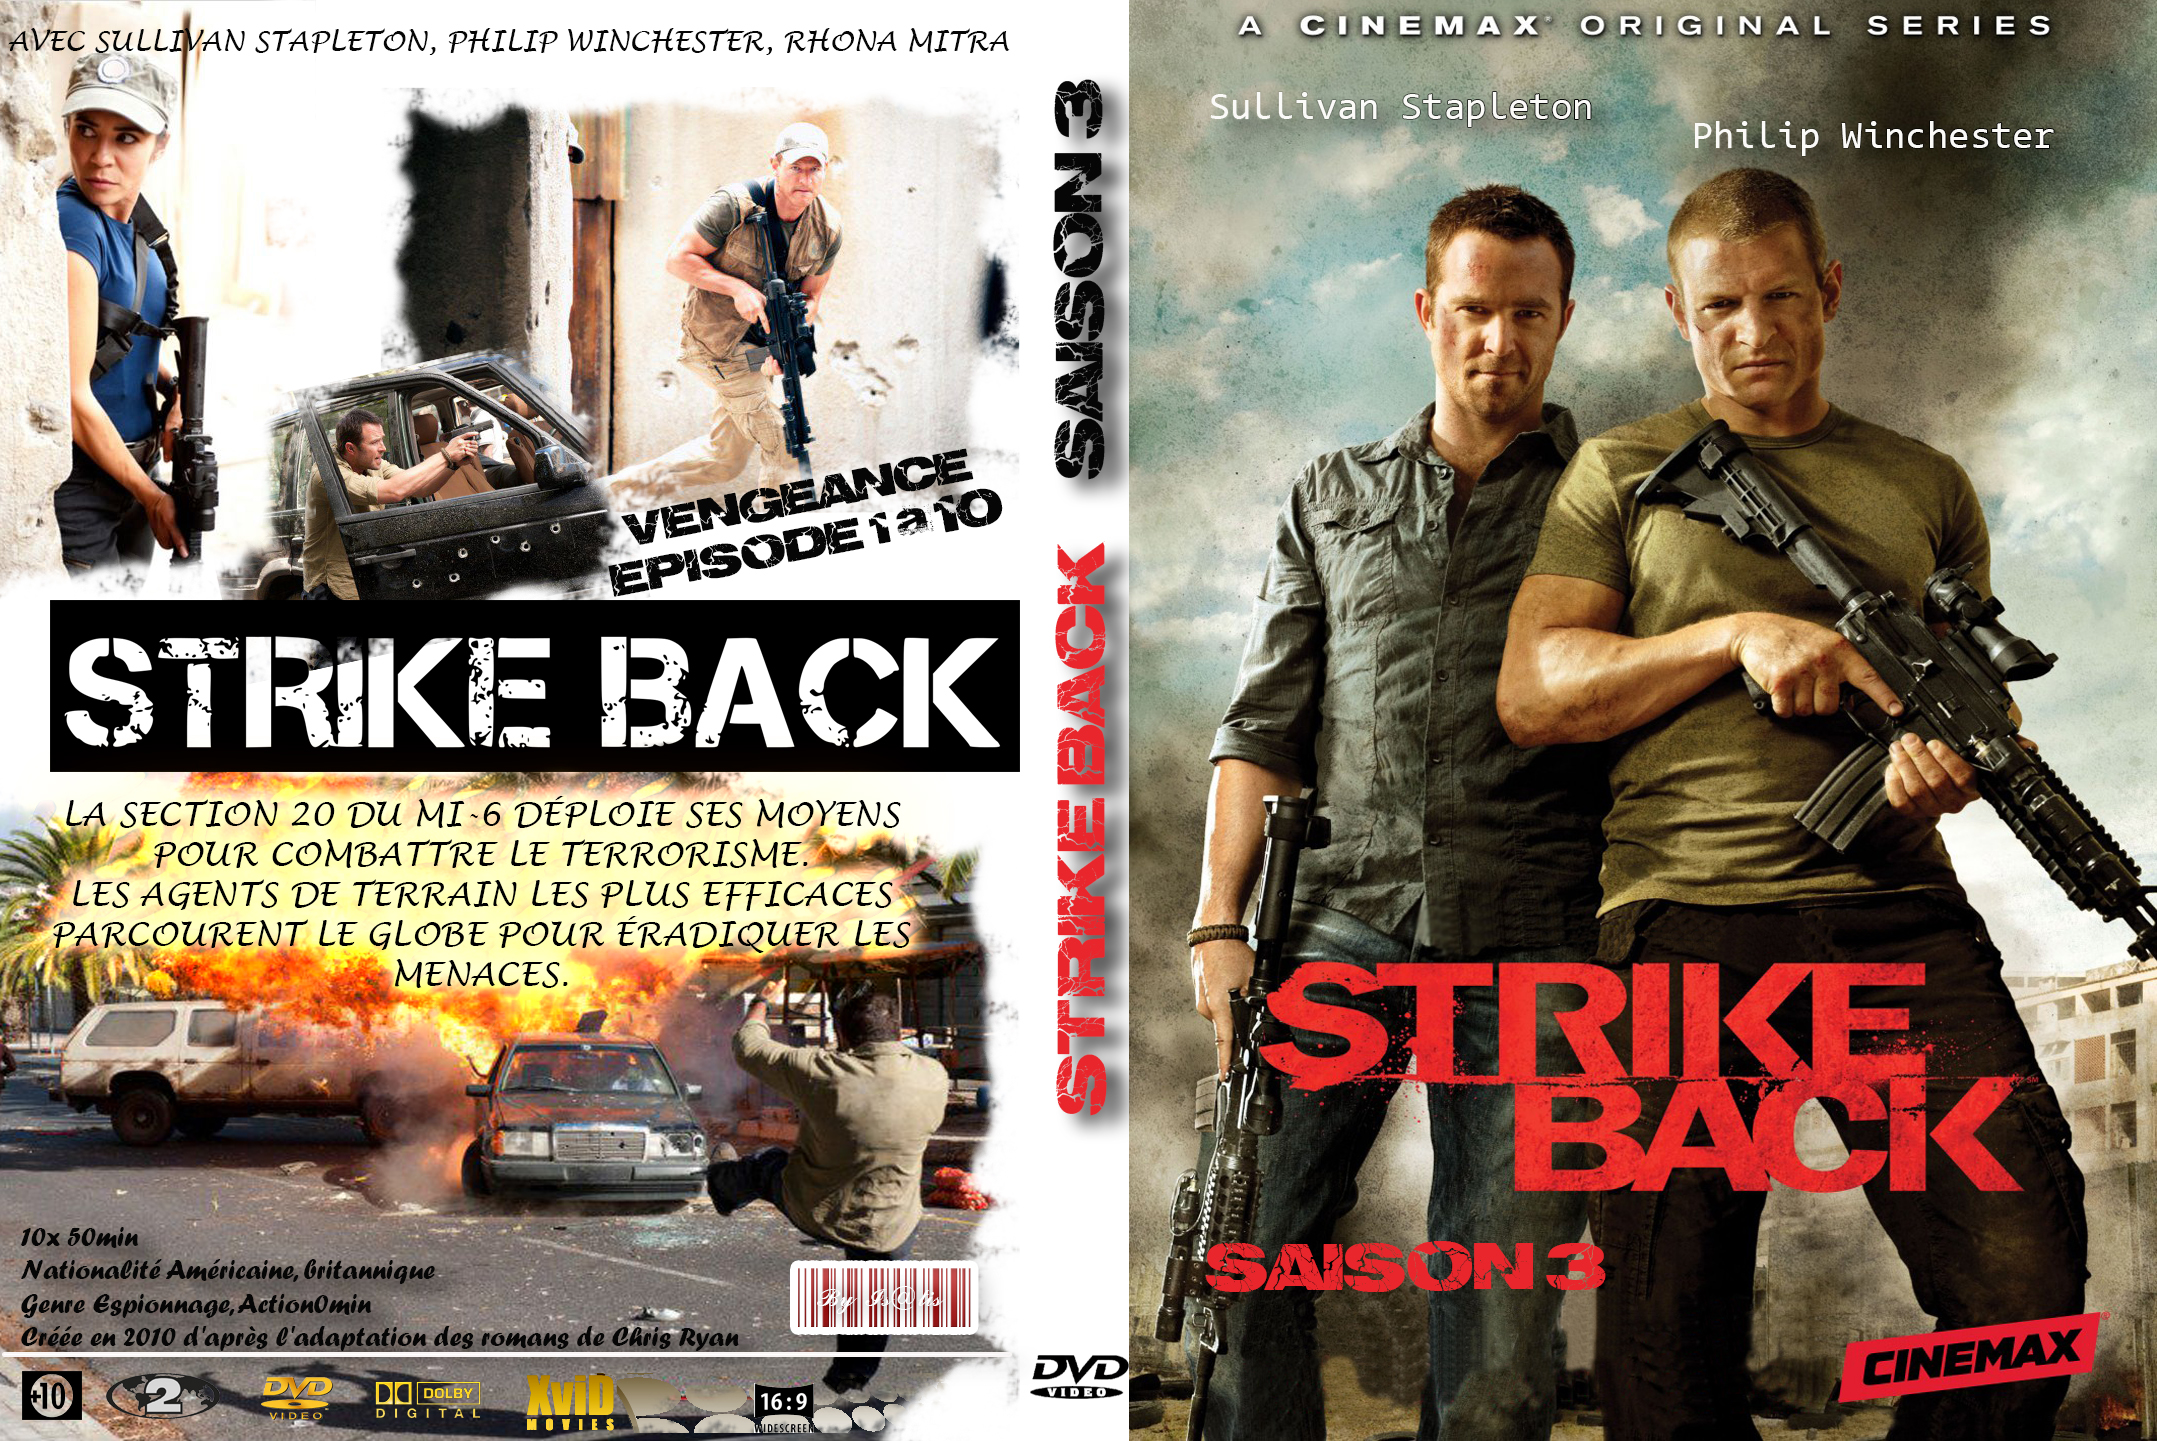 Jaquette DVD Strike back Saison 3 custom